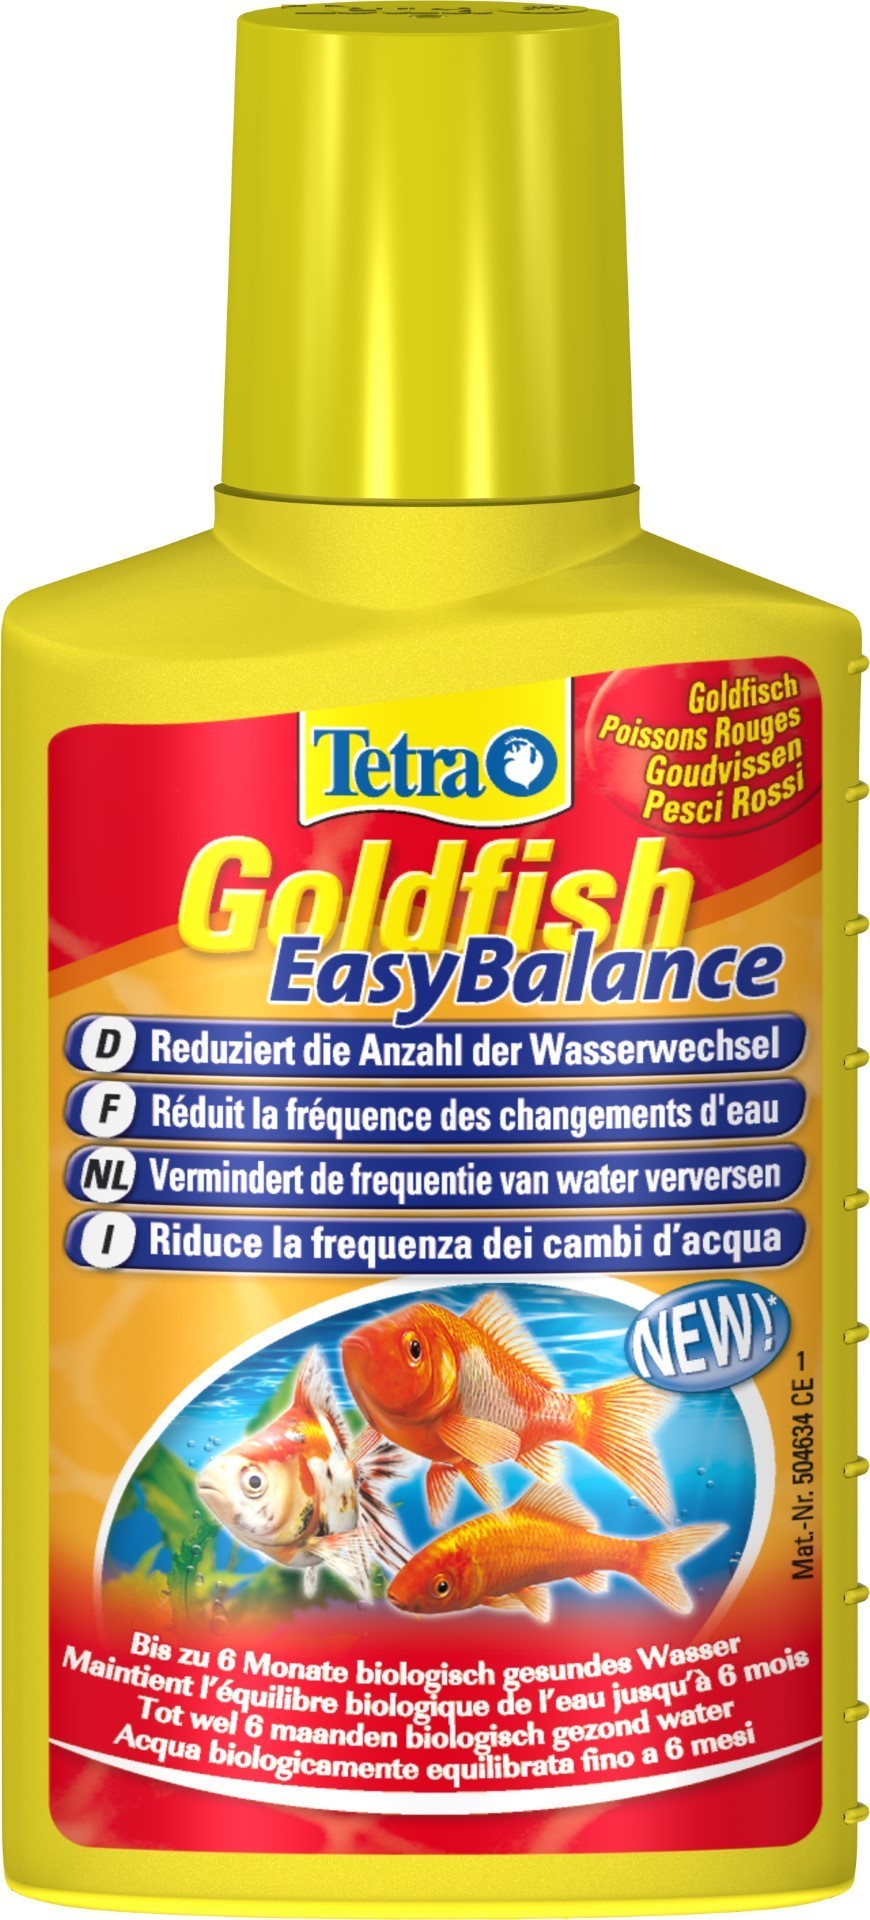 https://www.warentuin.nl/media/catalog/product/1/7/1774004218183285_tetra_dierenaccessoires_tetra_goldfish_easy_balance_100_ml_tet_3856.jpg